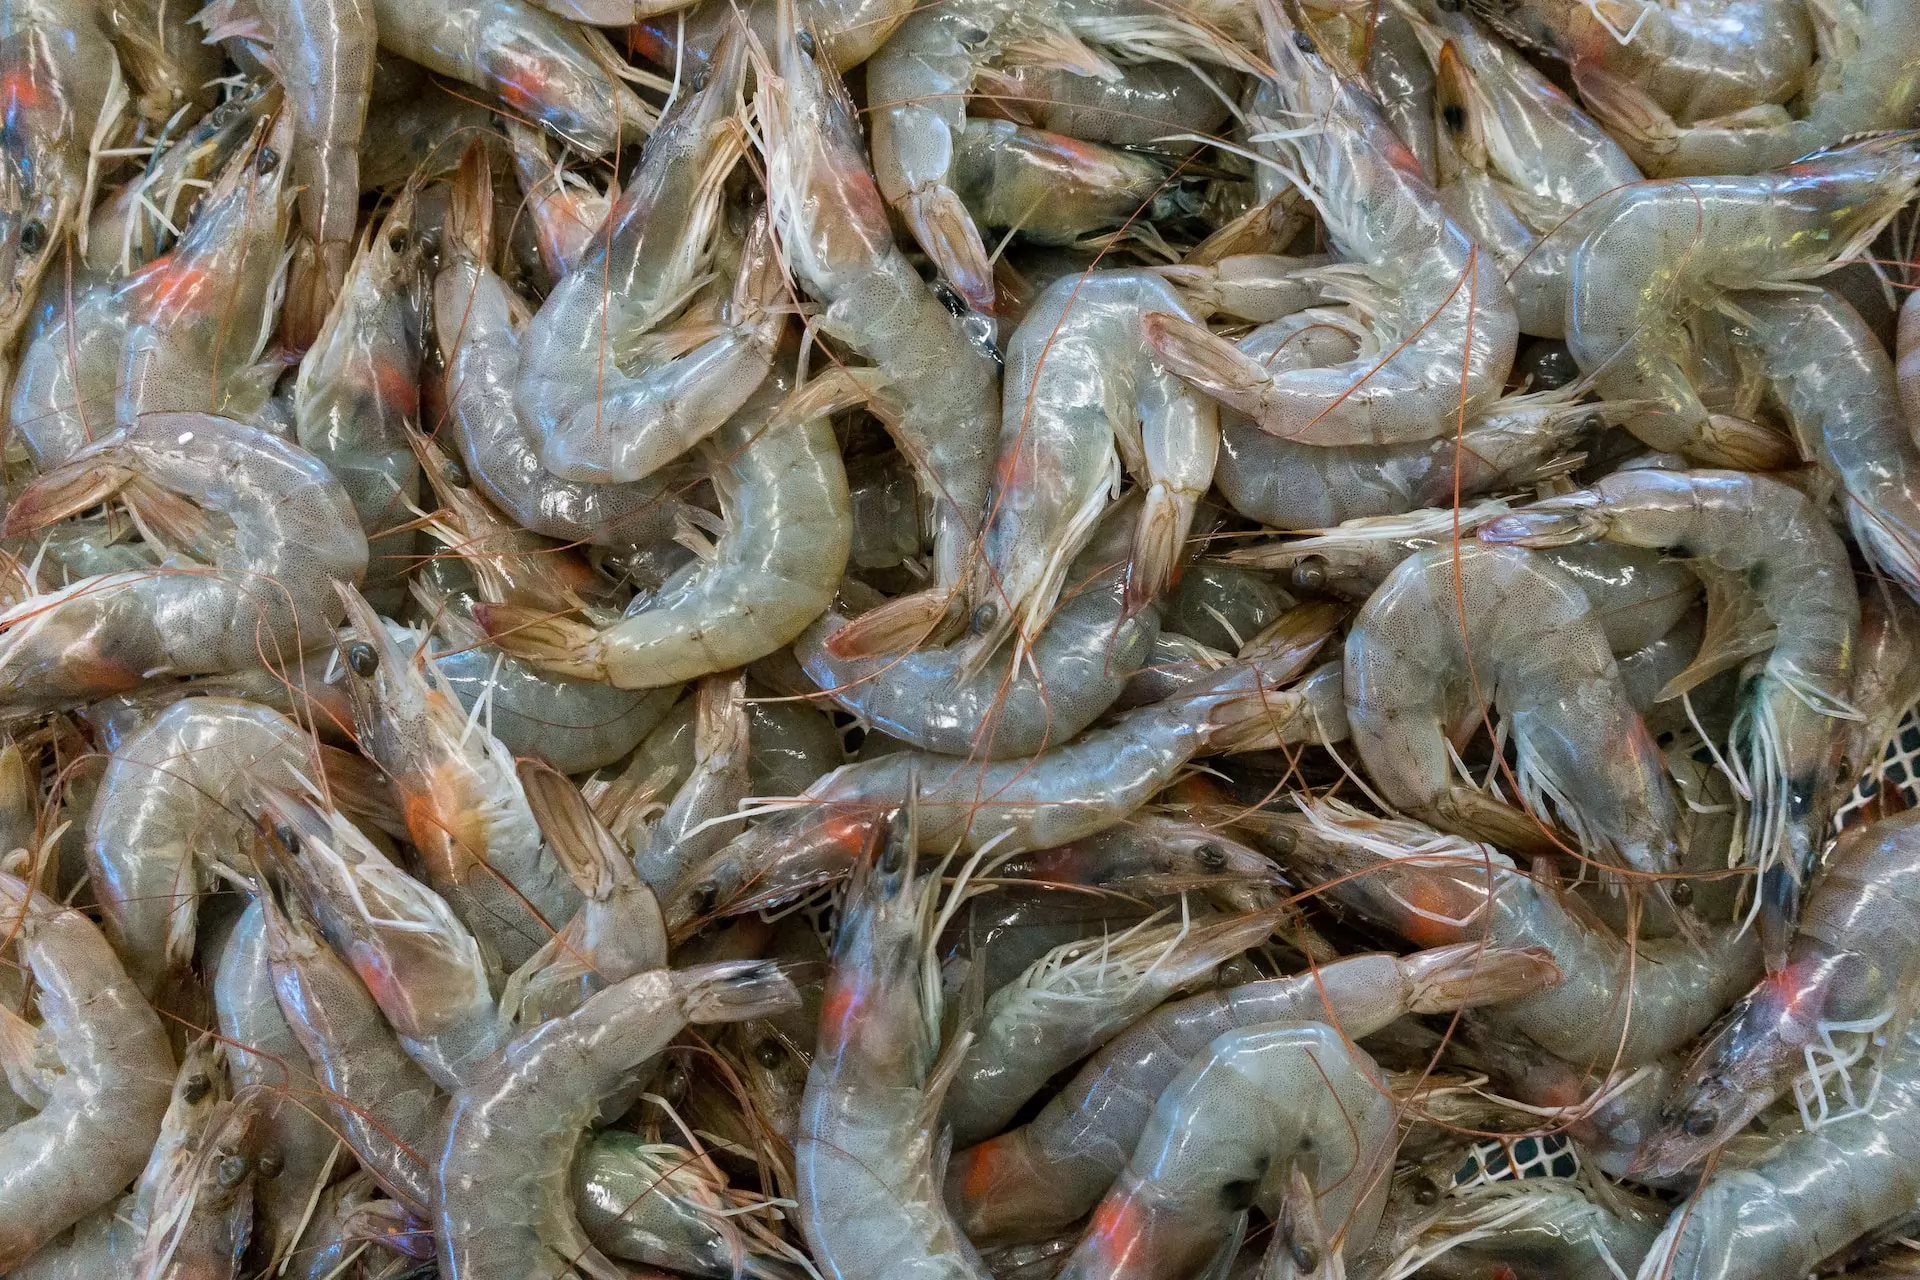 The shrimp market